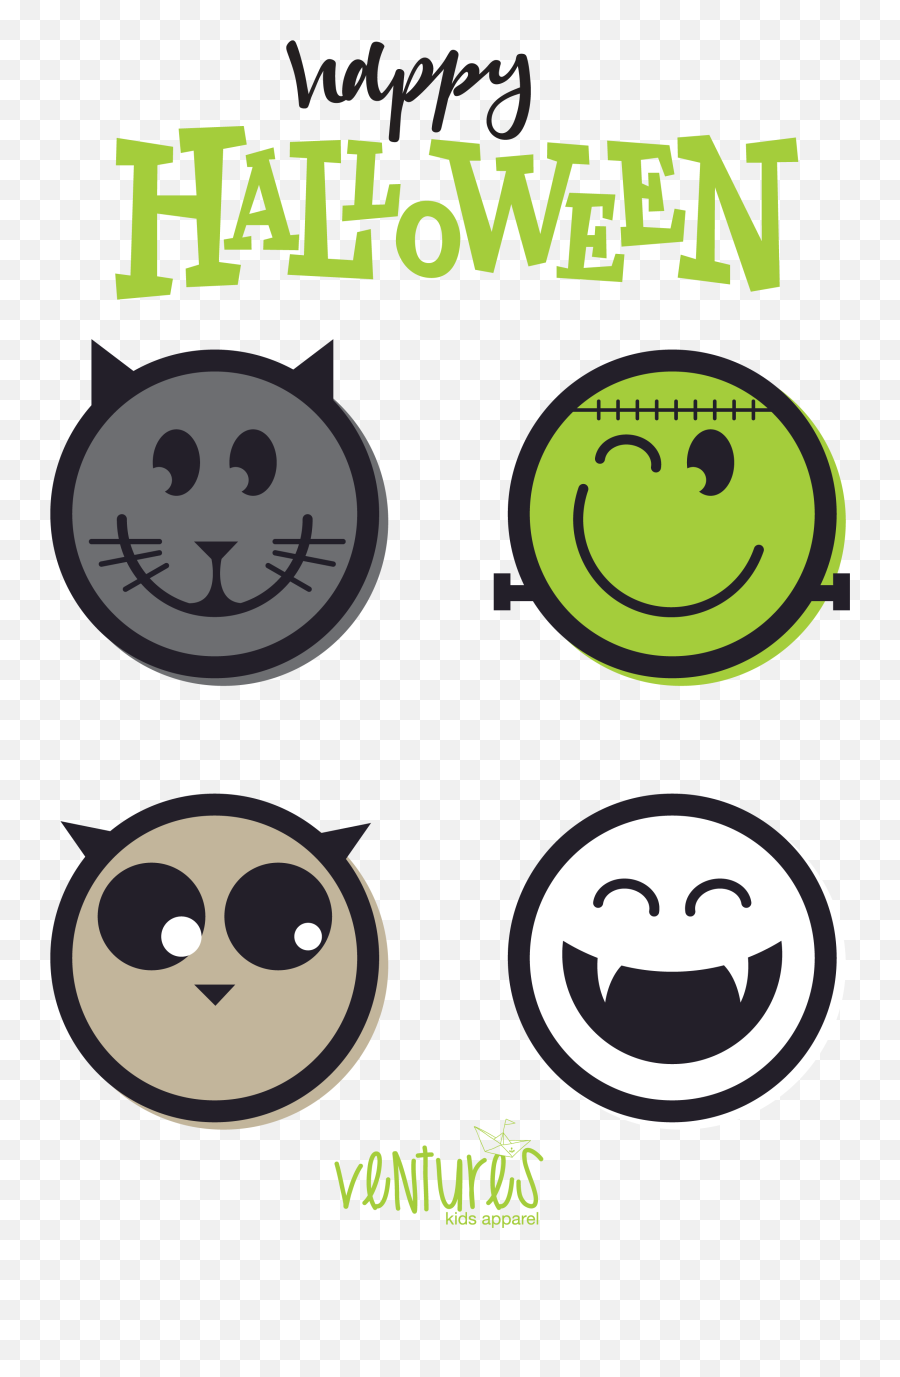 Halloween Emojis Ventures Kids Online Store Powered By - Whmis Symbols,Halloween Emoticons